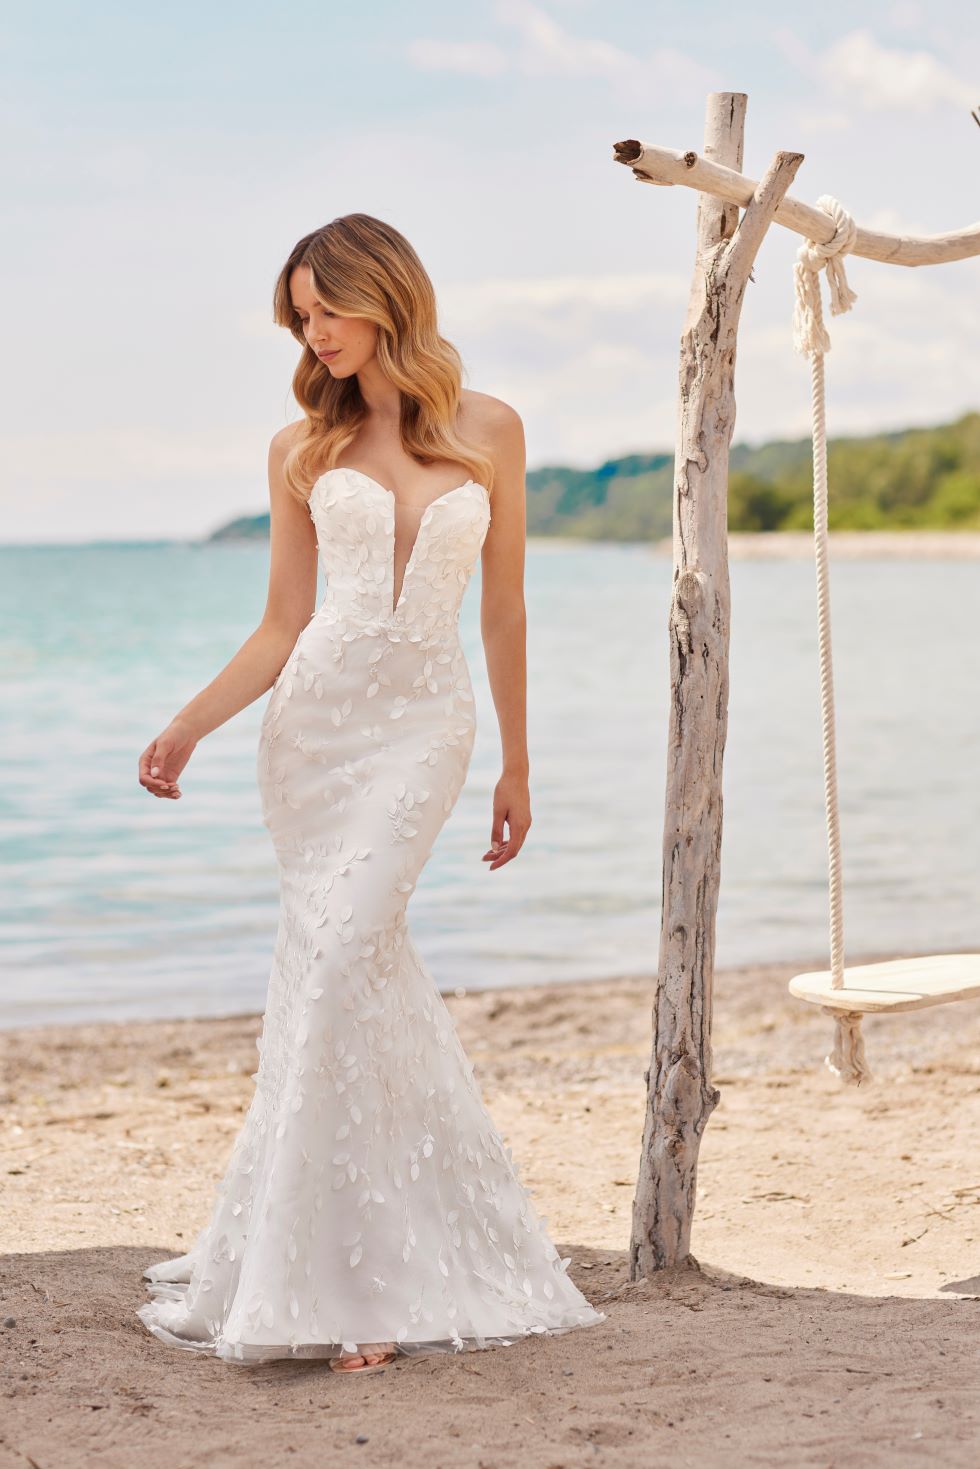 Beautiful bride wearing strapless lace wedding dress on beach